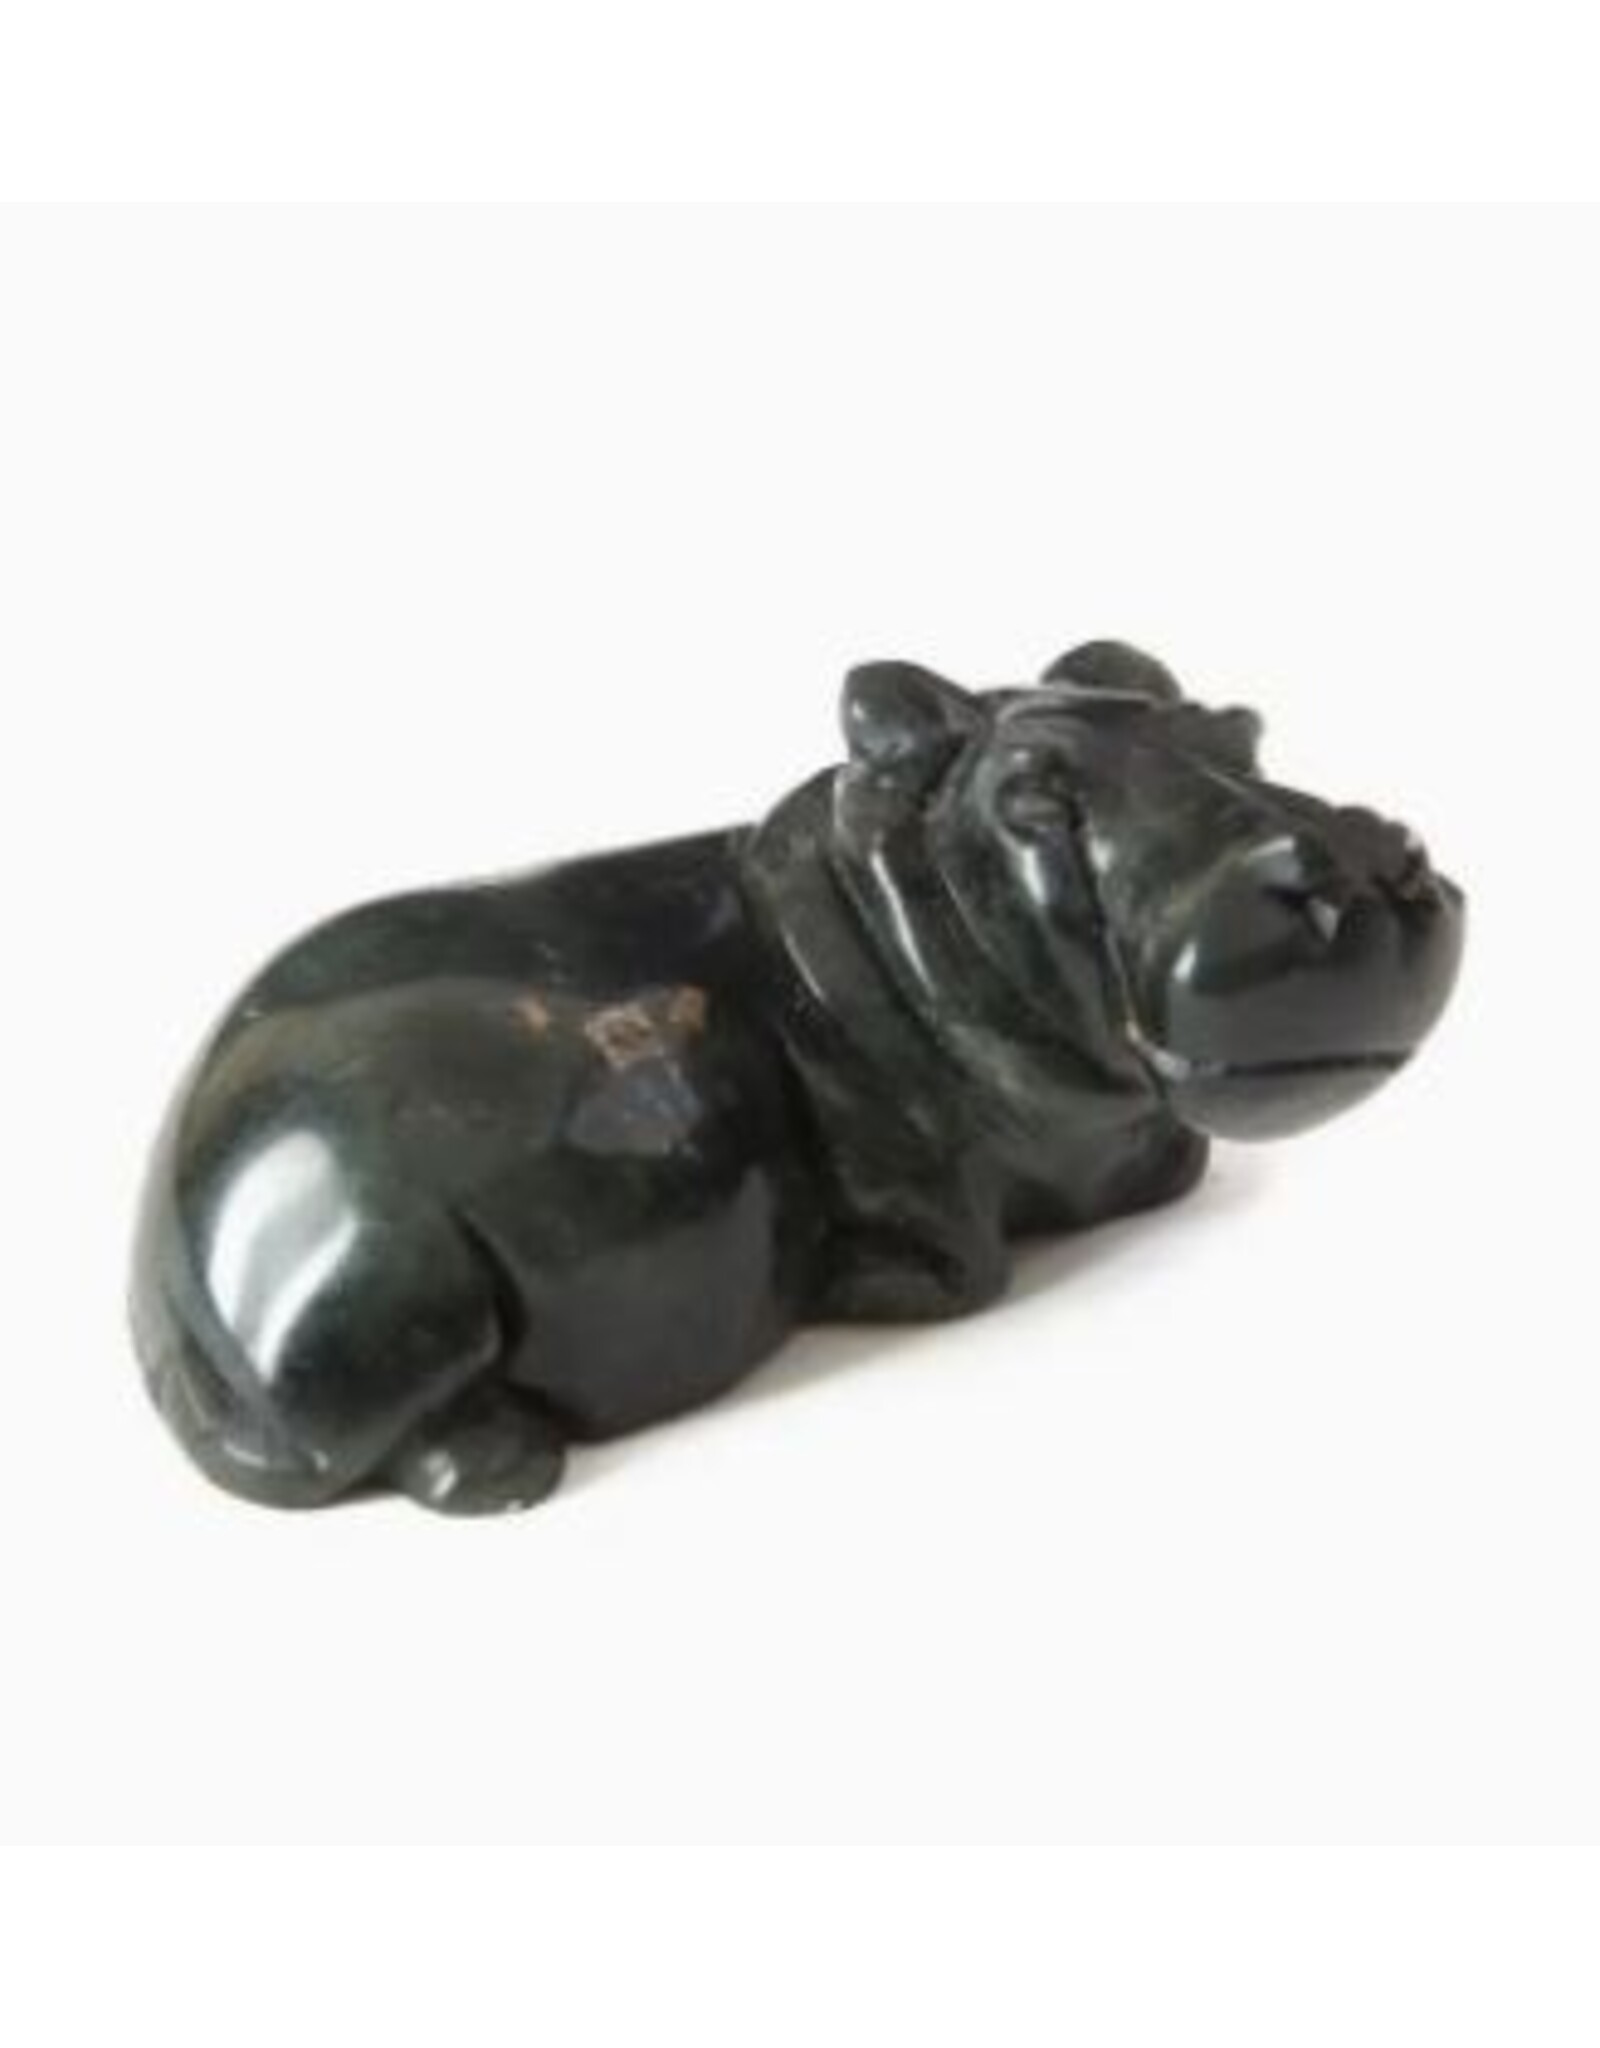 Zimbabwe Tiny Serpentine Hippo Sculpture, Zimbabwe